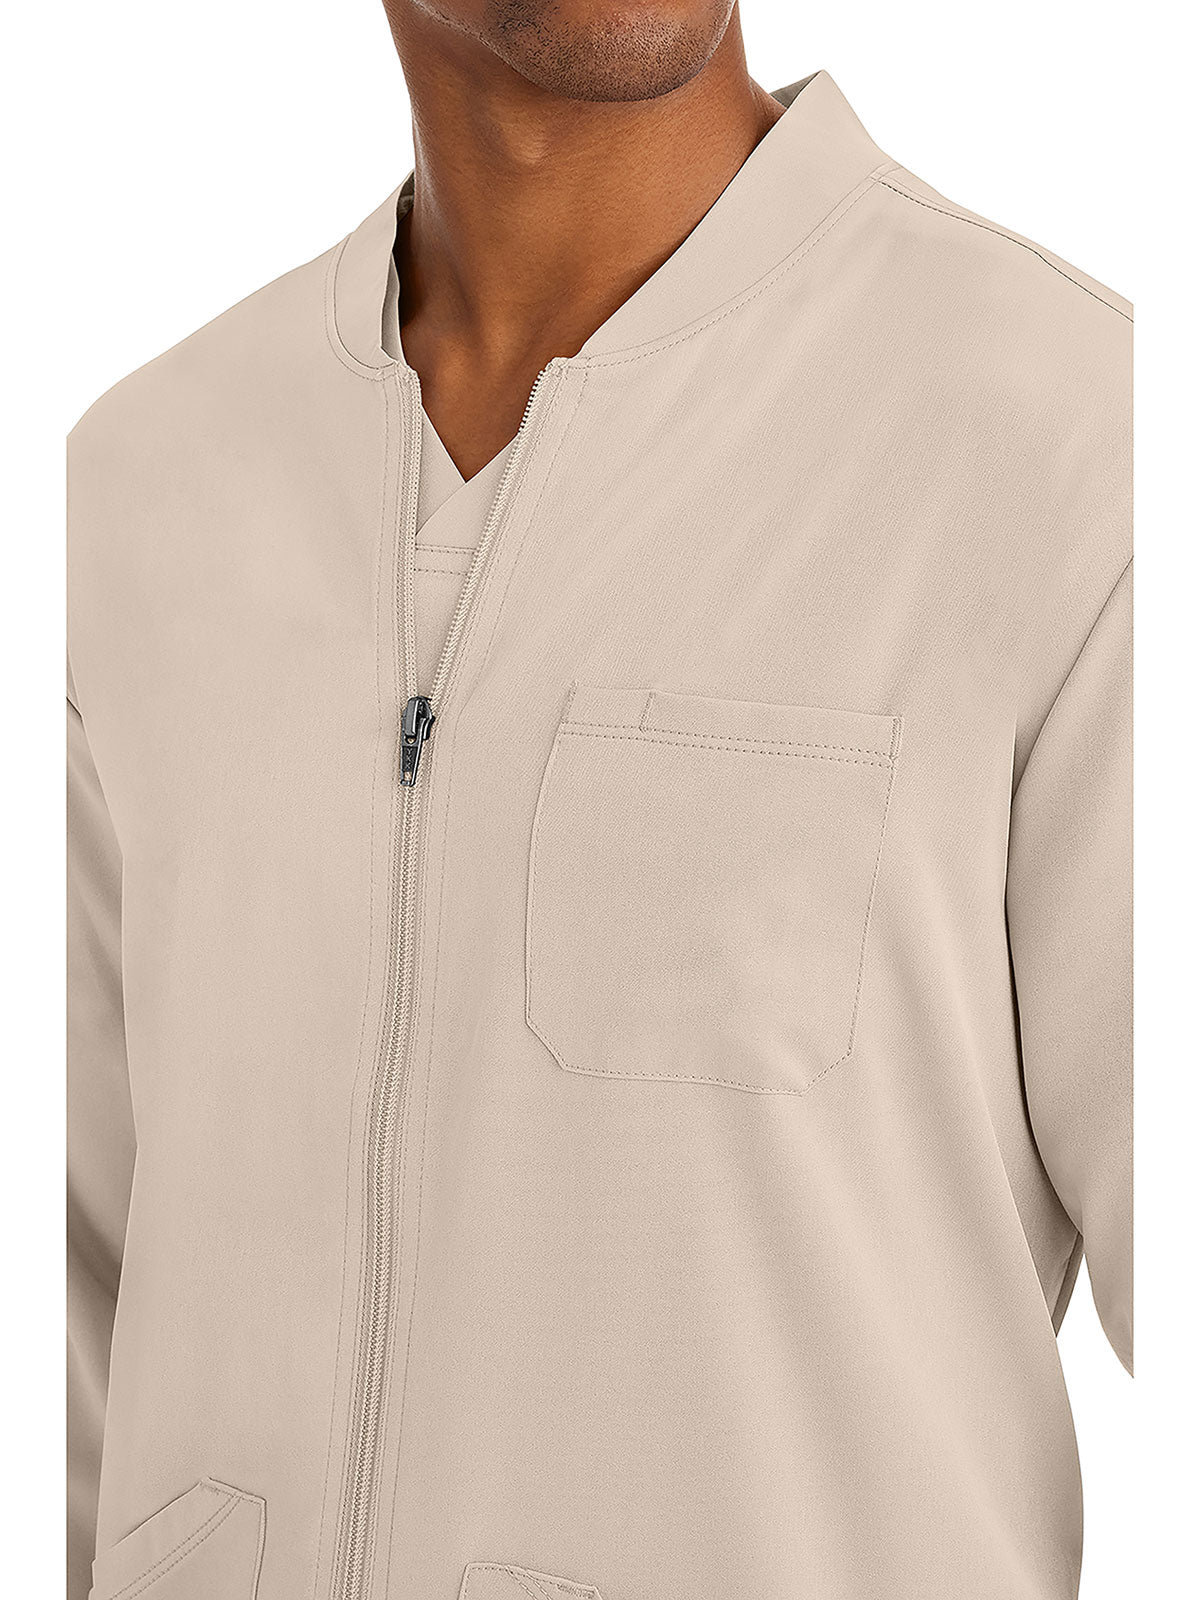 HH Works - Men's Michael Zip Front Solid Scrub Jacket – Scrubs Uniforms